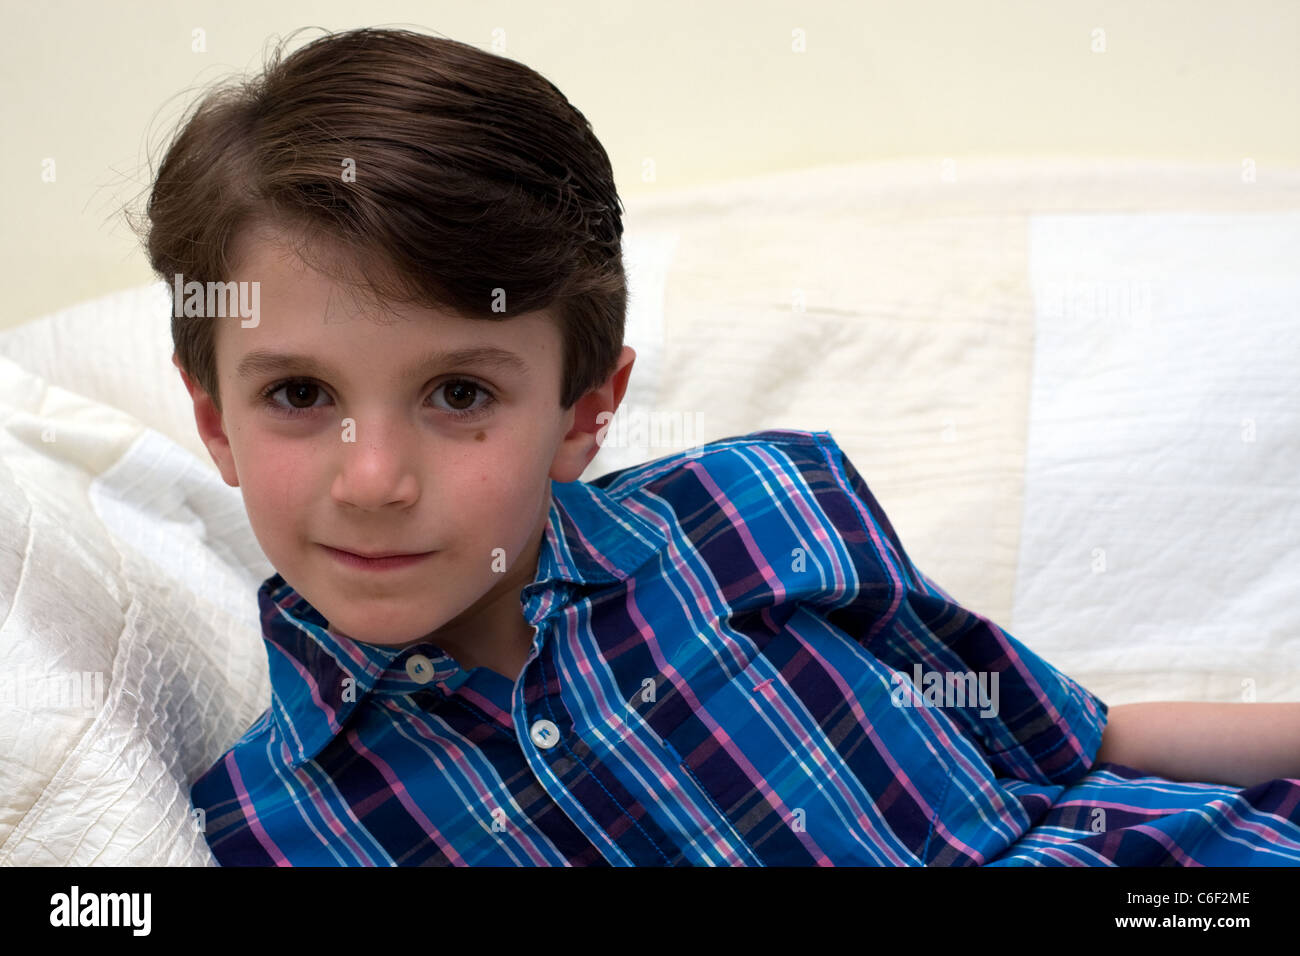 white kid child boy formal dress portrait smiling Stock Photo